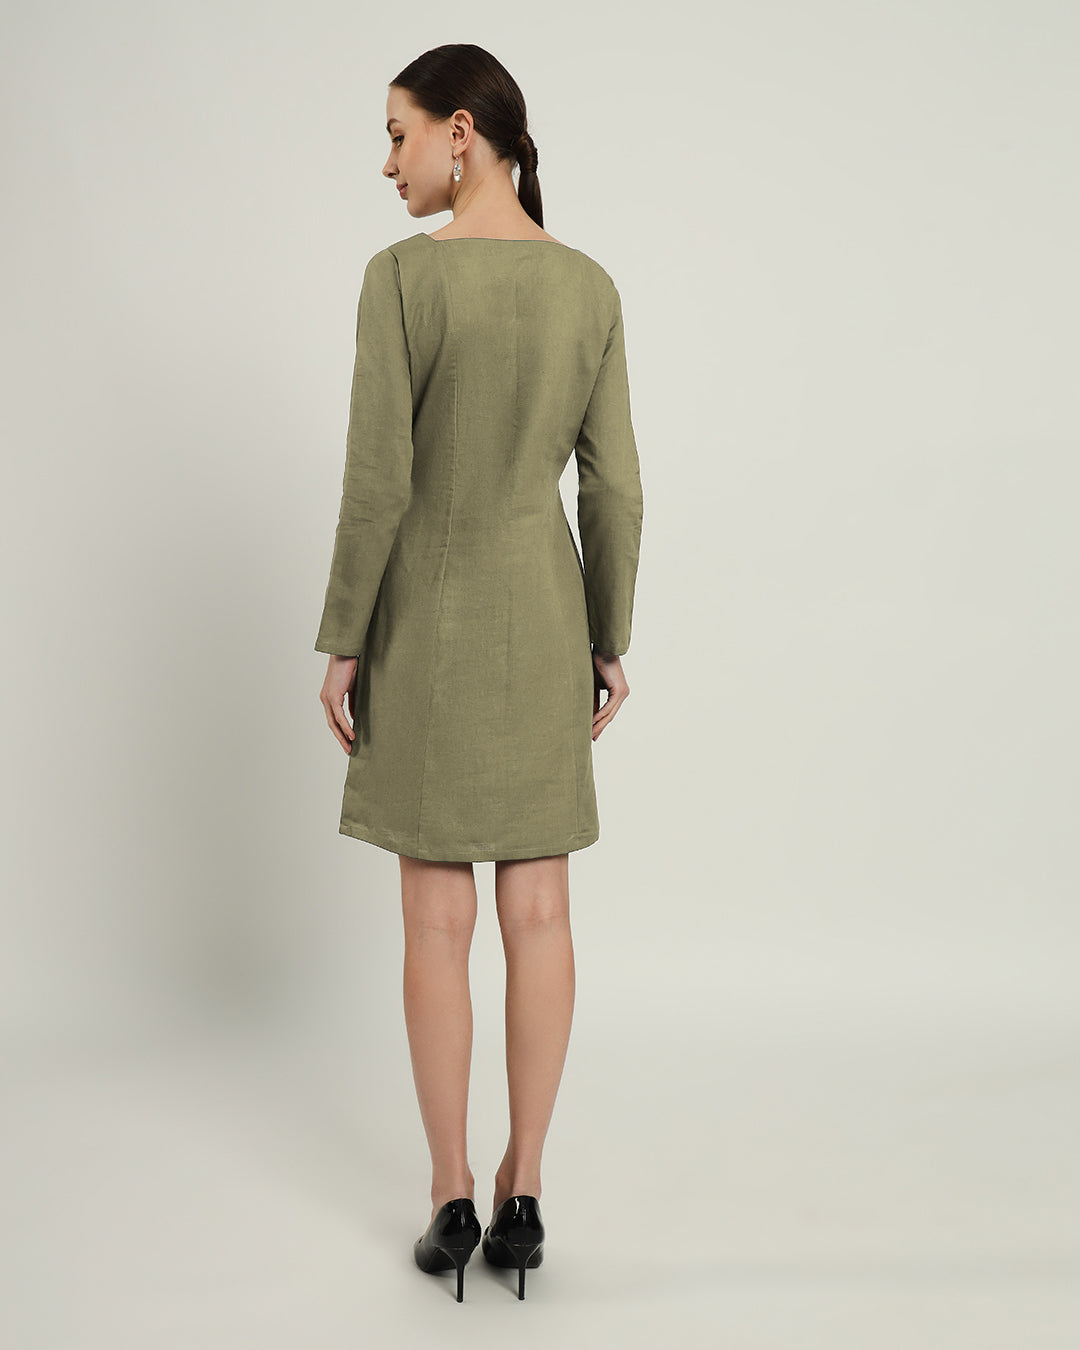 The Auburn Olive Linen Dress